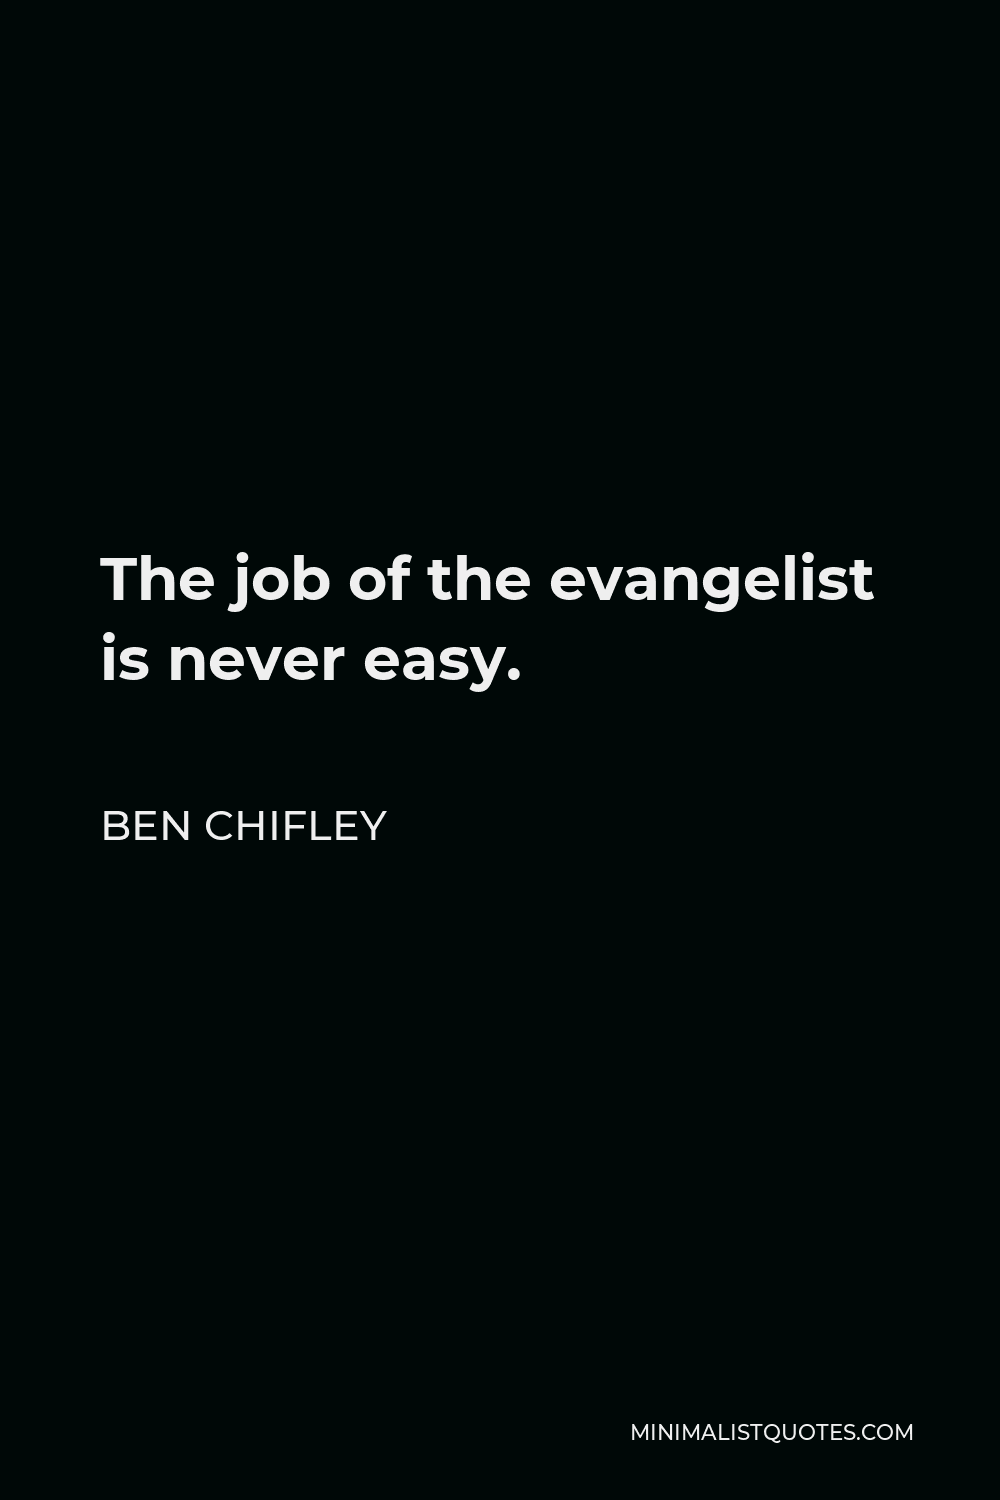 Ben Chifley Quote - The job of the evangelist is never easy.